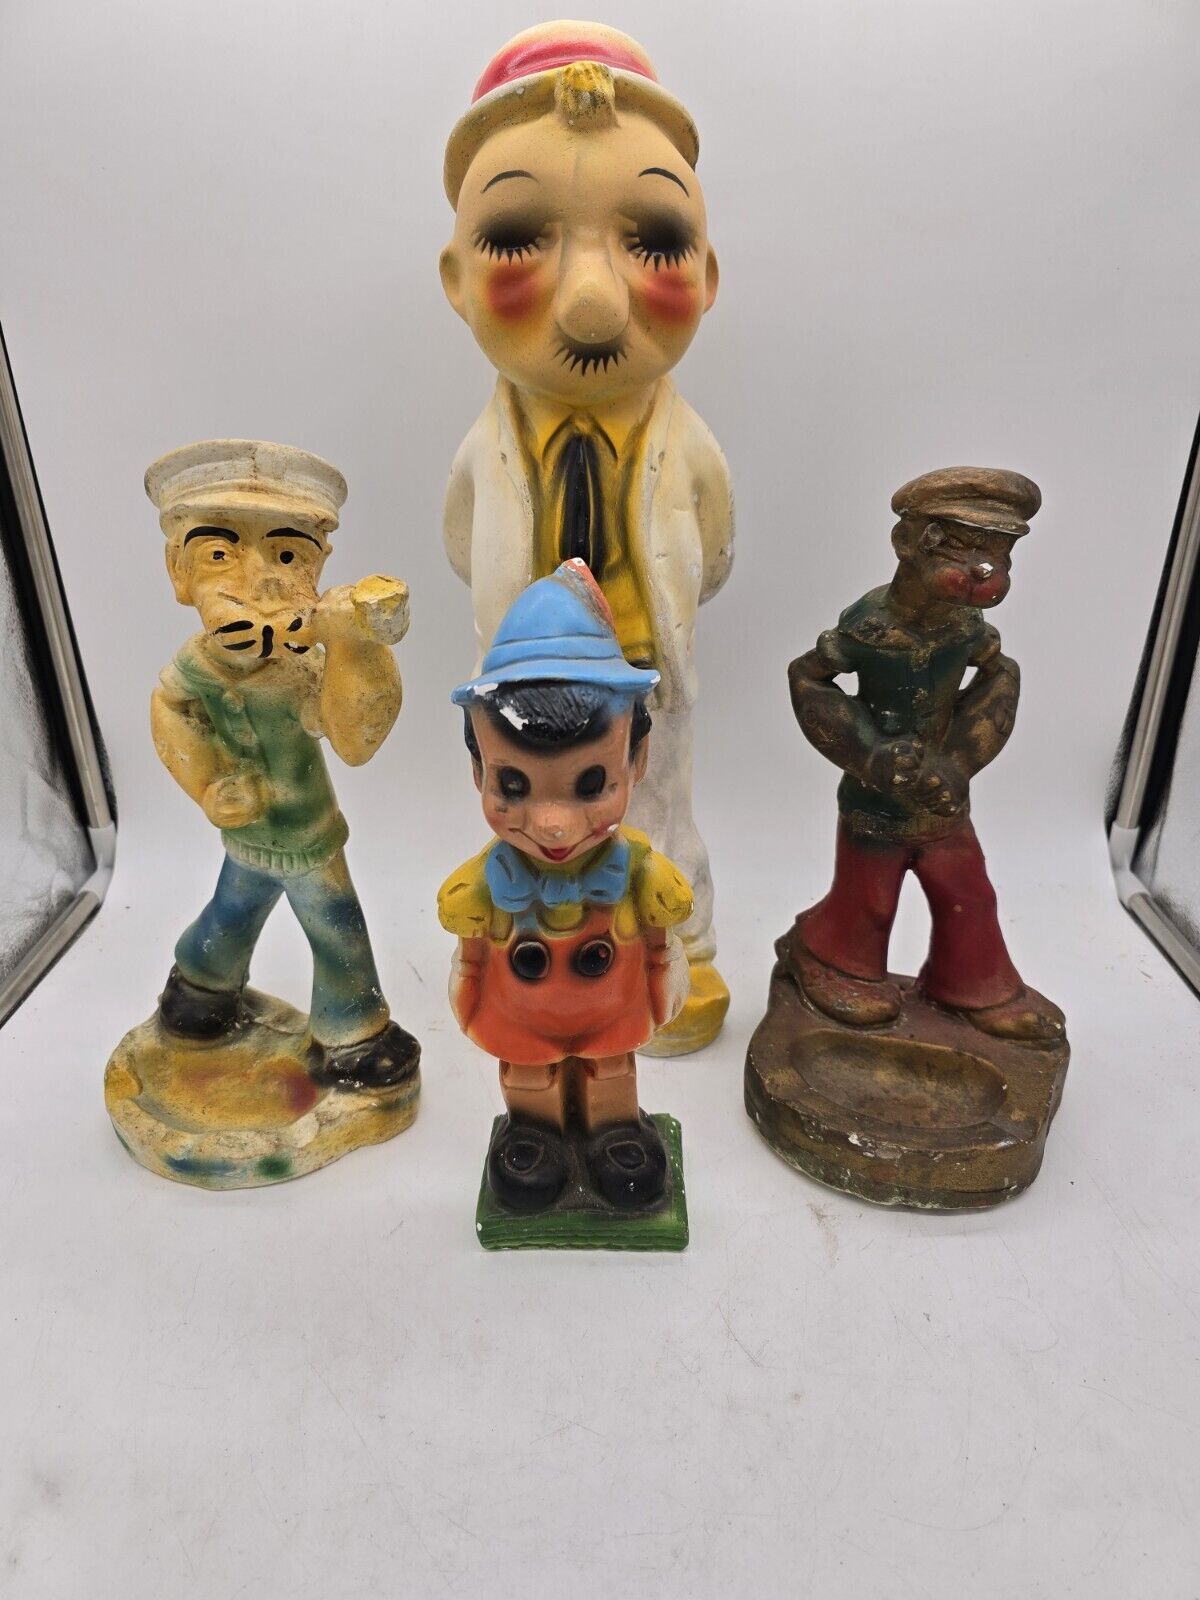 Vintage Popeye chalkware collectible figurine